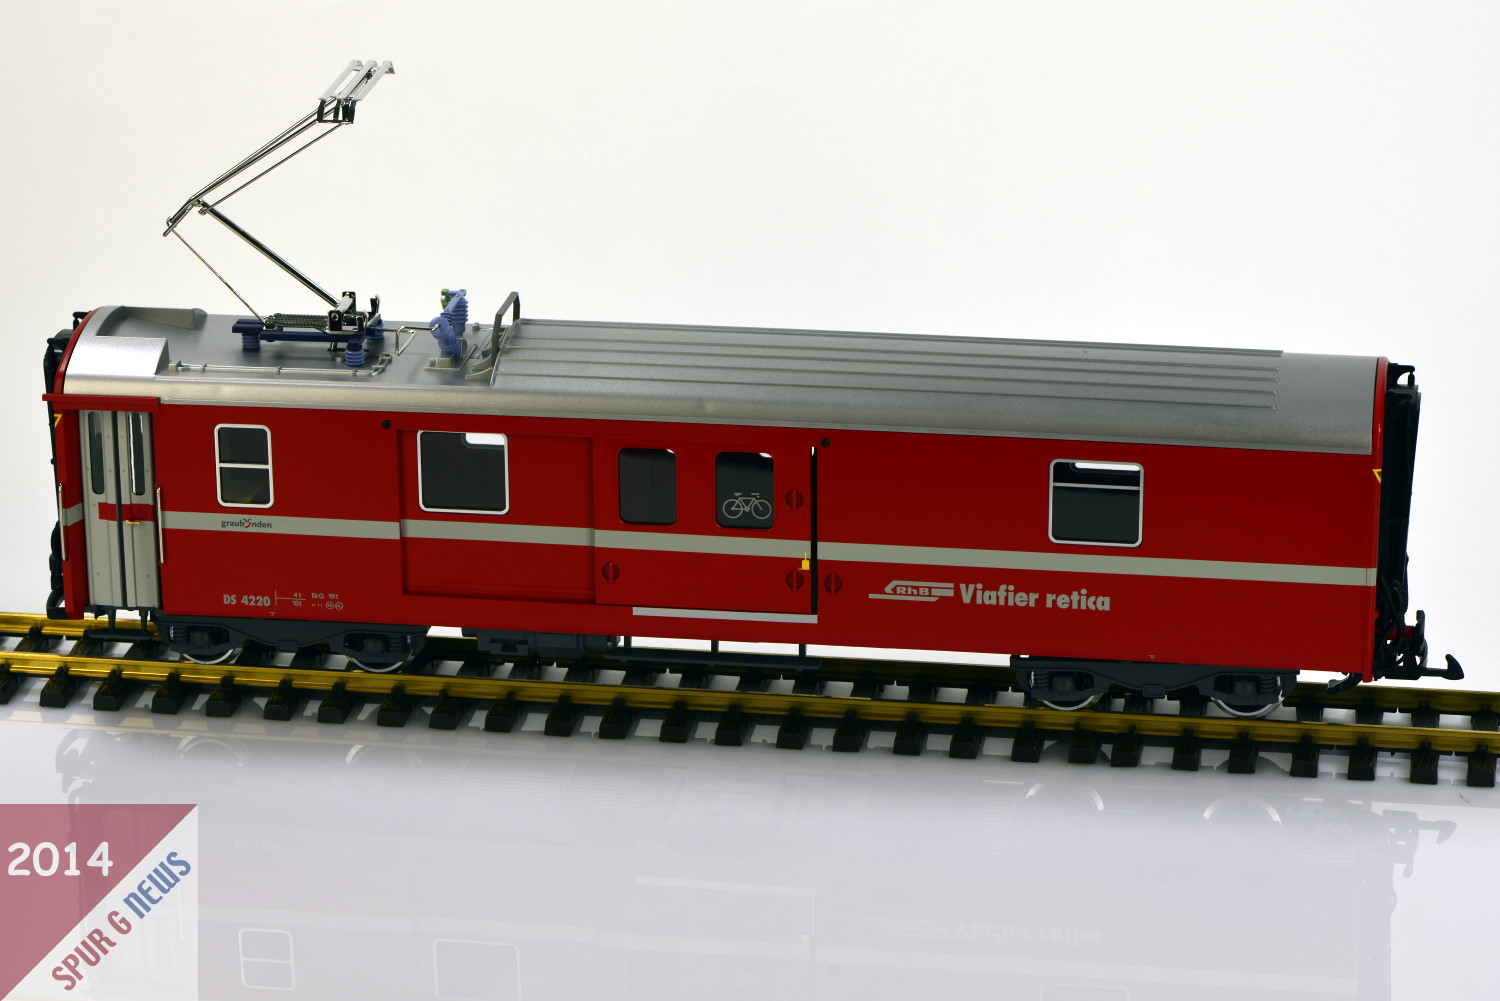 LGB Neuheit 2013 - ausgeliefert Anfang Februar 2014 - Art.Nr. 30691 - RhB Gepckwagen mit Stromabnehmer am Dach. 